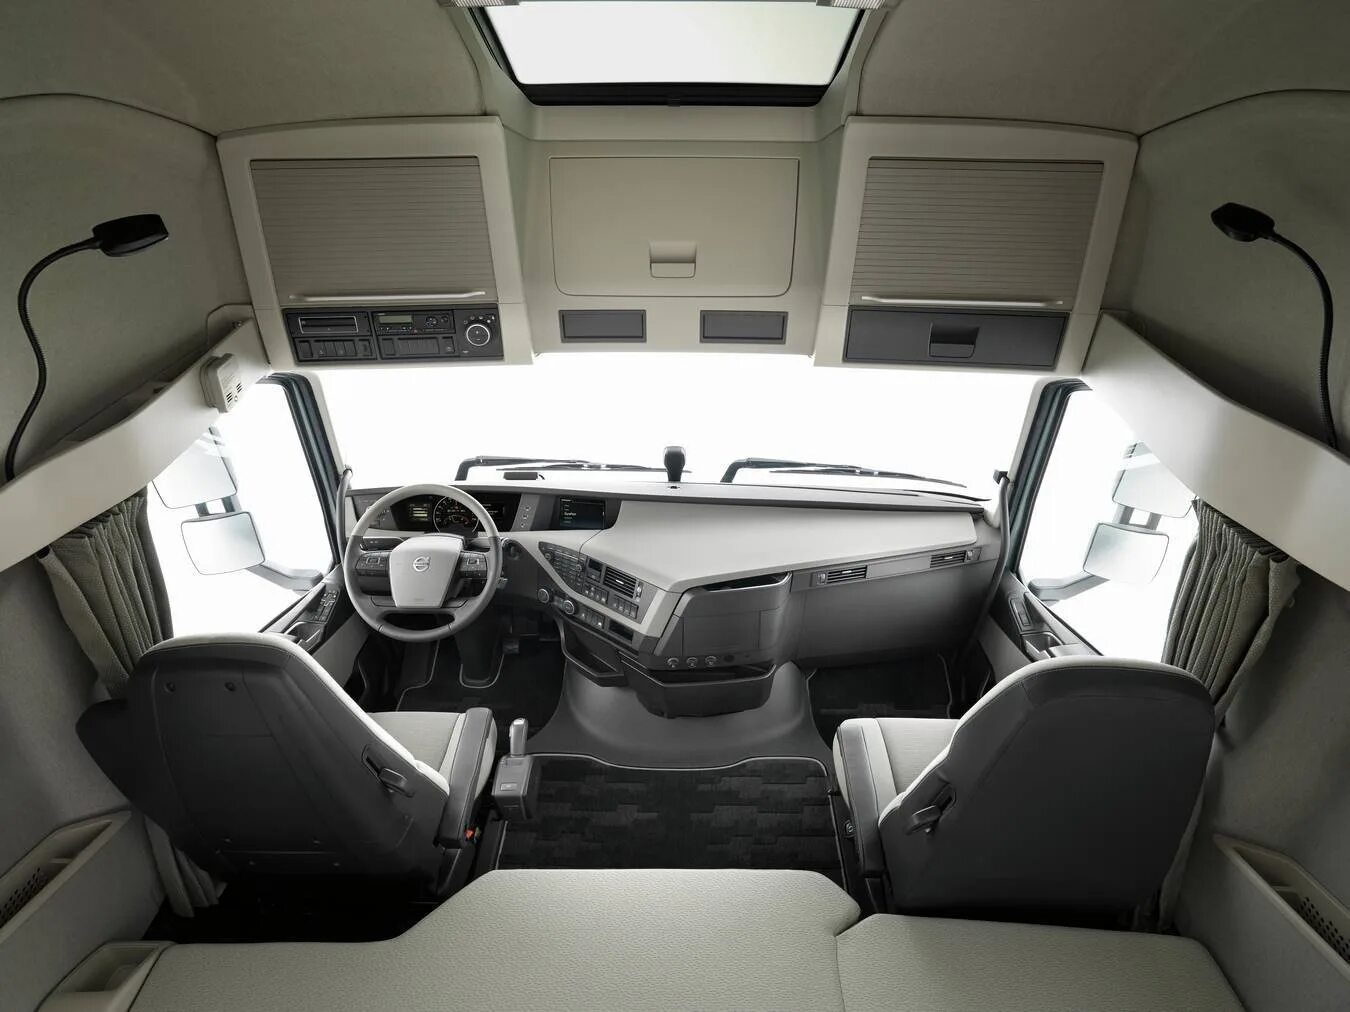 Грузовик внутри. Volvo fh16 750 Interior. Volvo fh16 750 кабина. Volvo FH 2022 кабина. Volvo FH 2021 кабина.